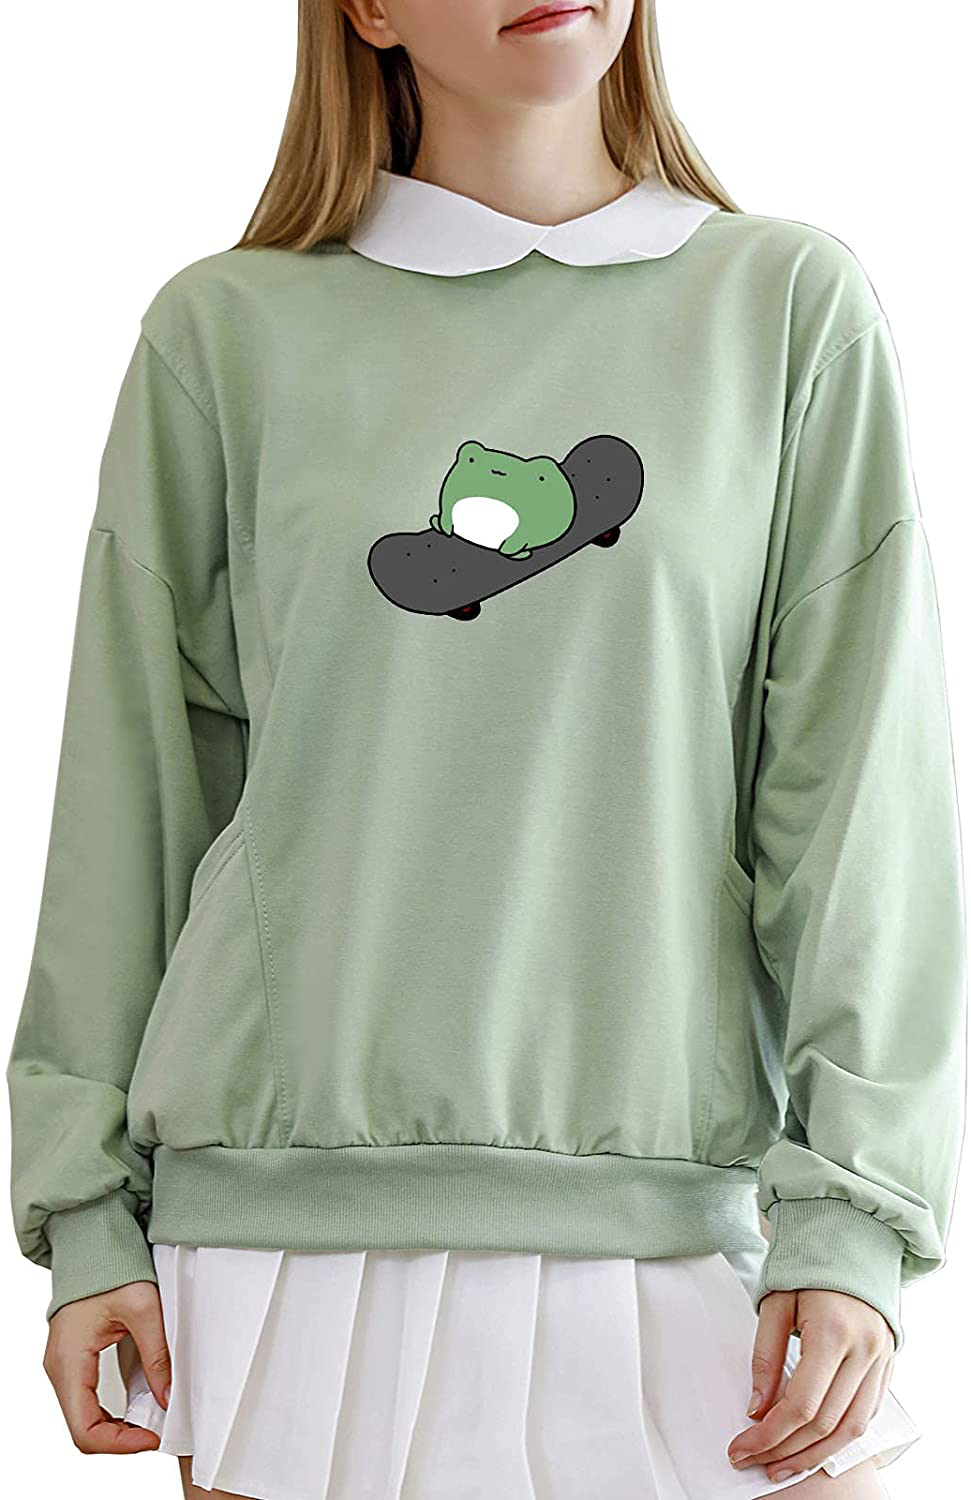 Wrenpies Frog Skateboarding Sweatshirt with Collar Hoodie Cotton Pullover Aesthetic Hoodies for Teen Girls Top Kawaii Clothes